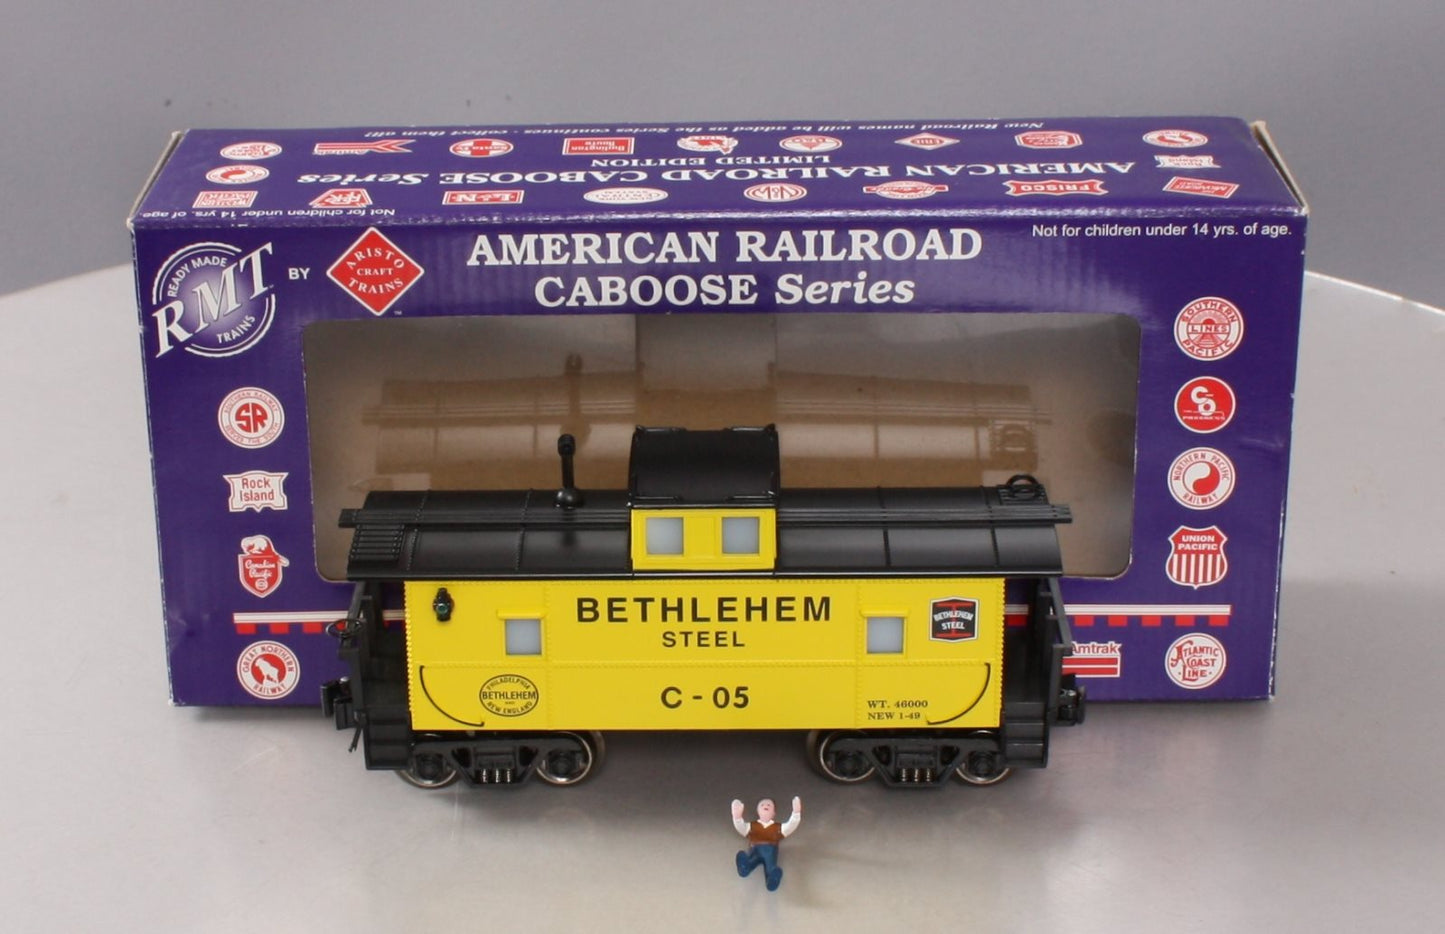 RMT 969193 O Caboose Bethlehem Steel #C-05